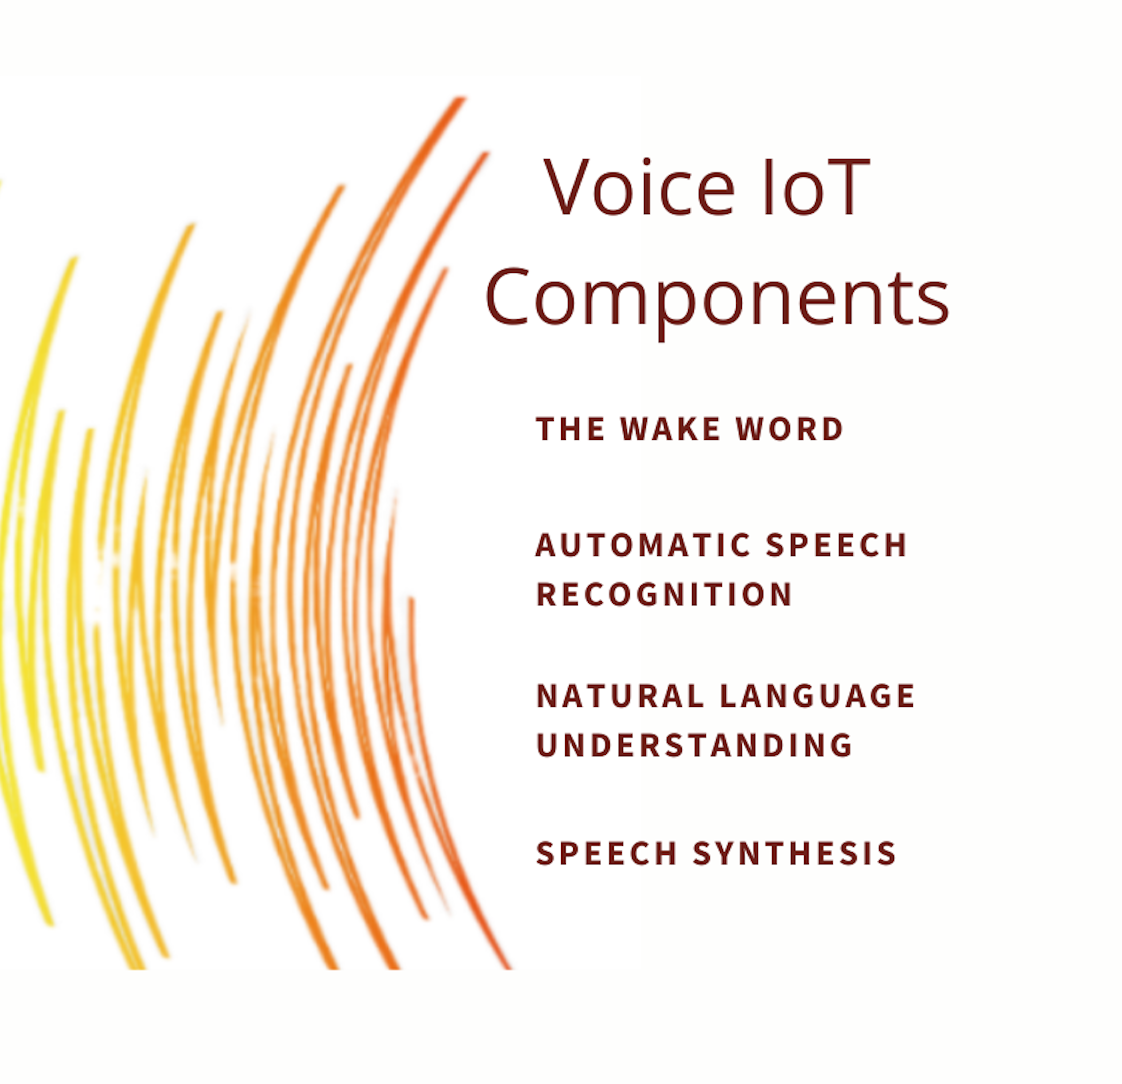 Voice IoT Components